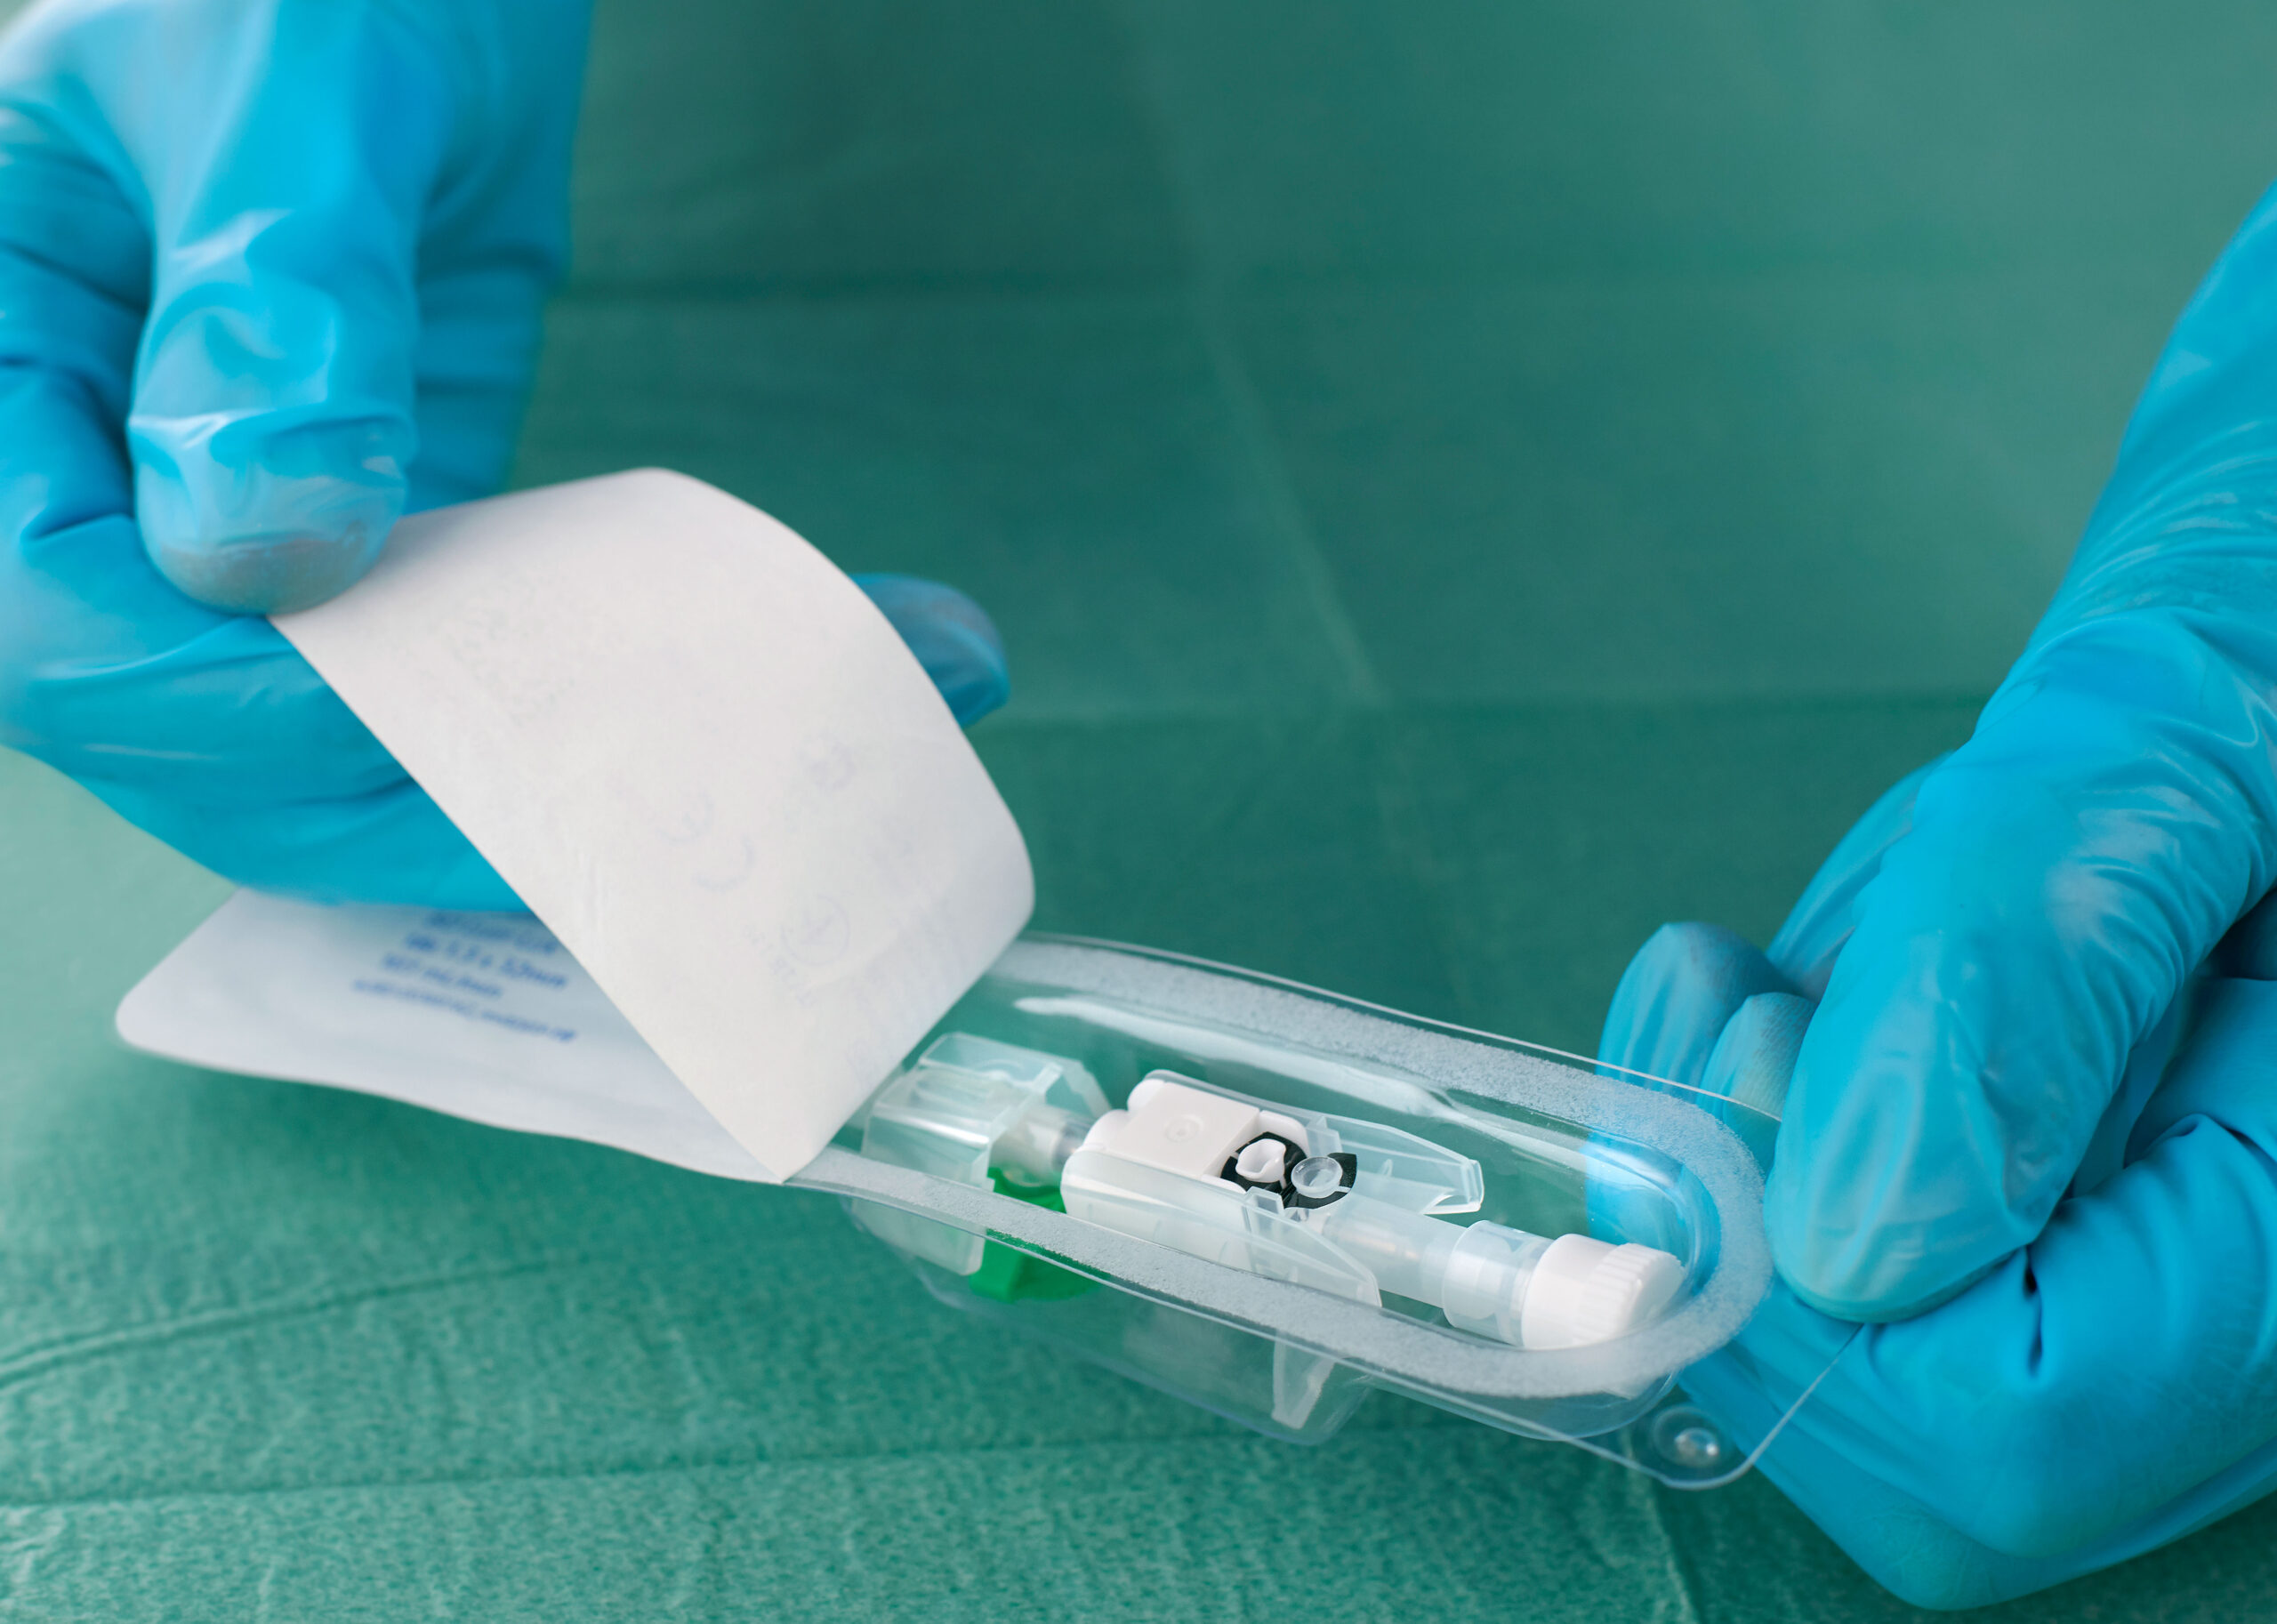 Klockner Pentaplast (kp) provides a wide range of medical device packaging films